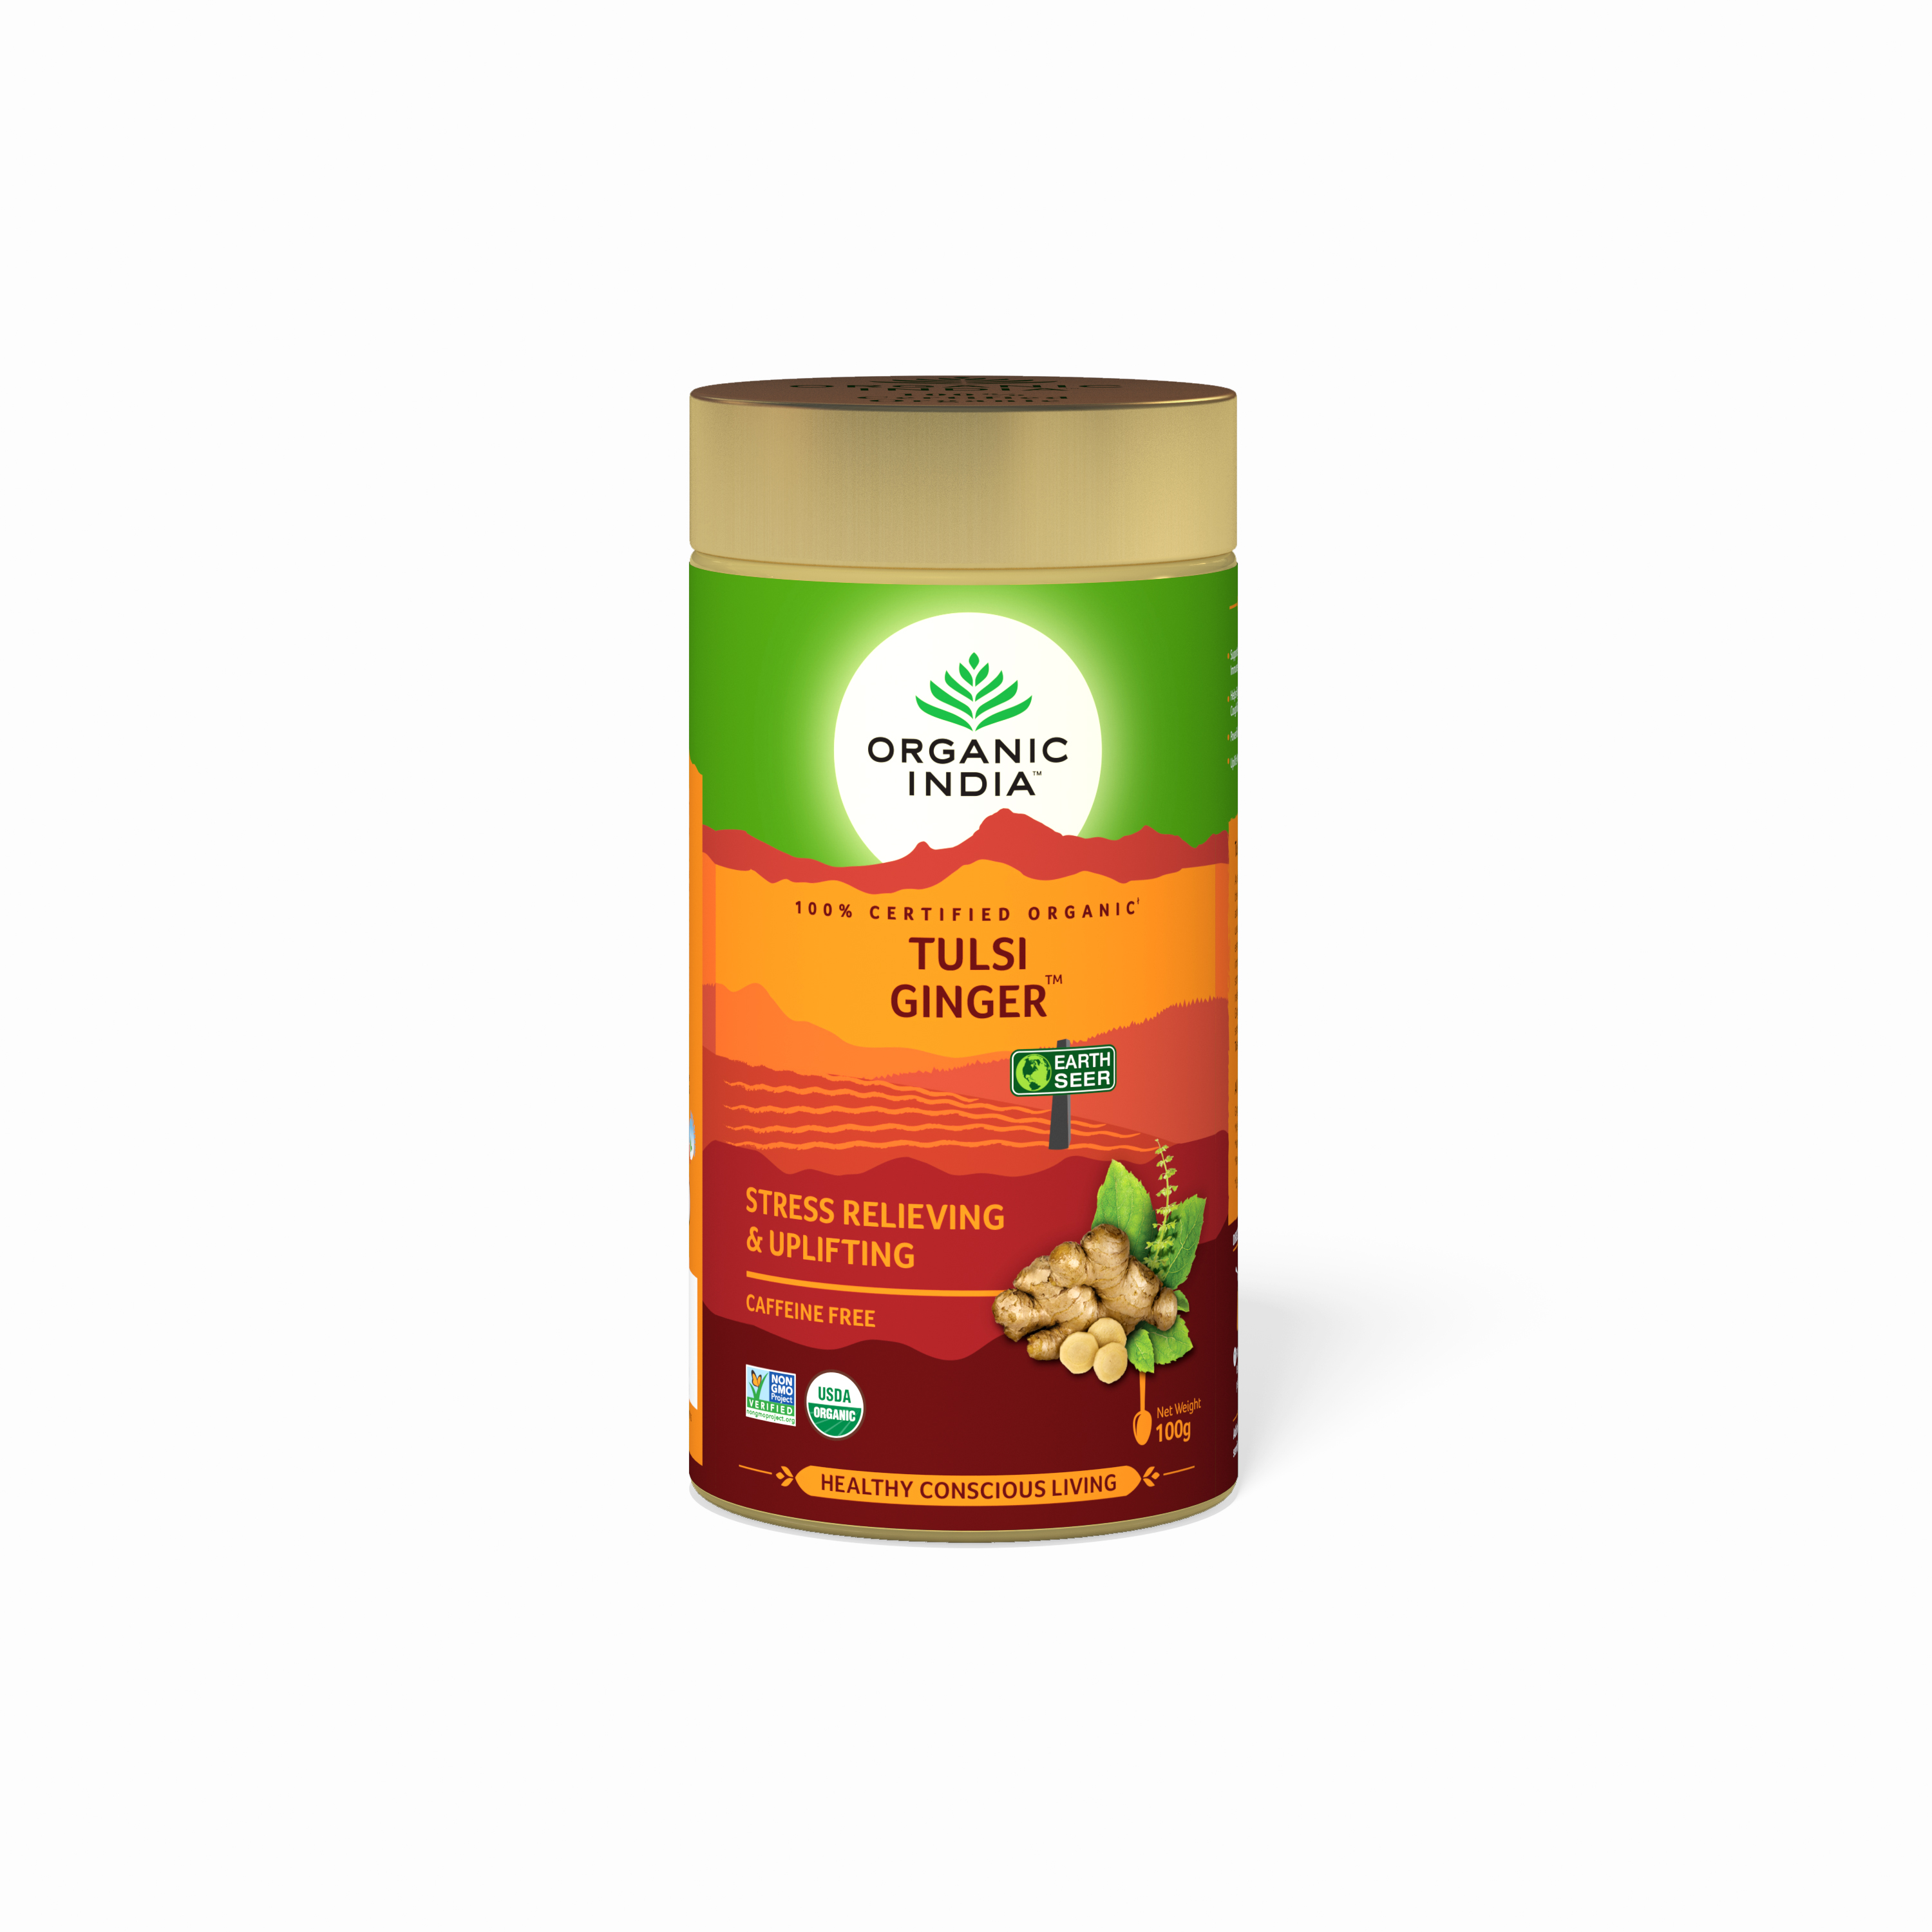 Buy Organic India Tulsi Ginger Tin at Best Price Online